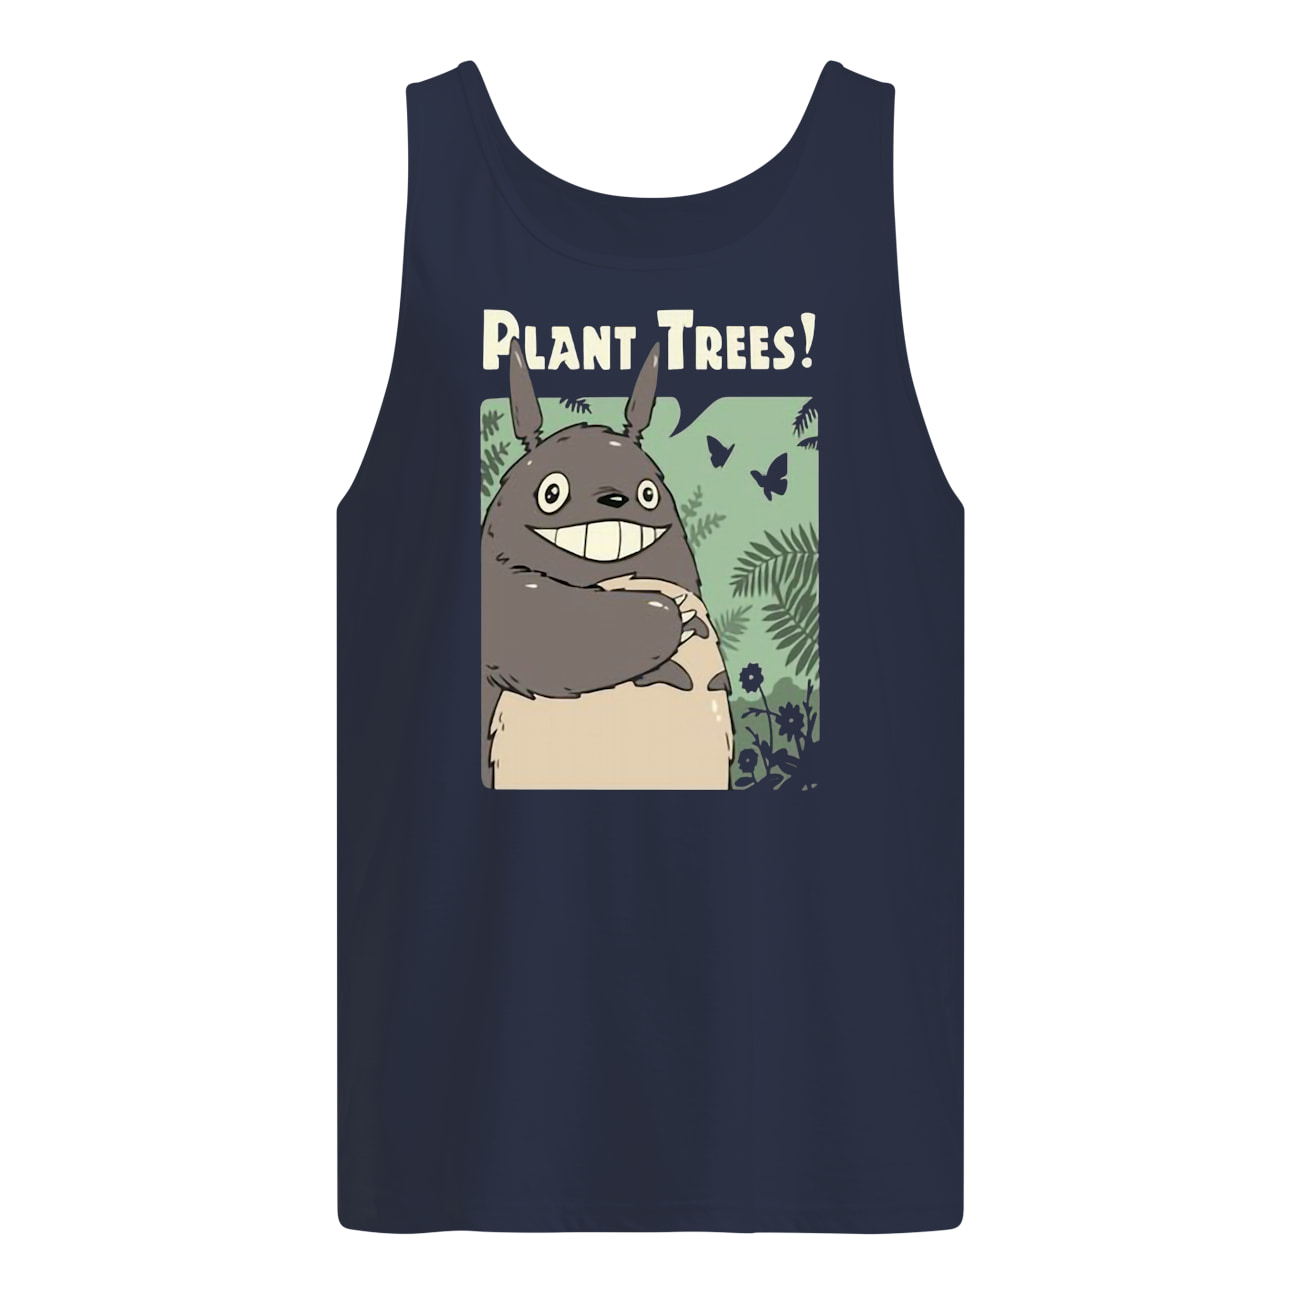 Totoro studio ghibli plant trees tank top